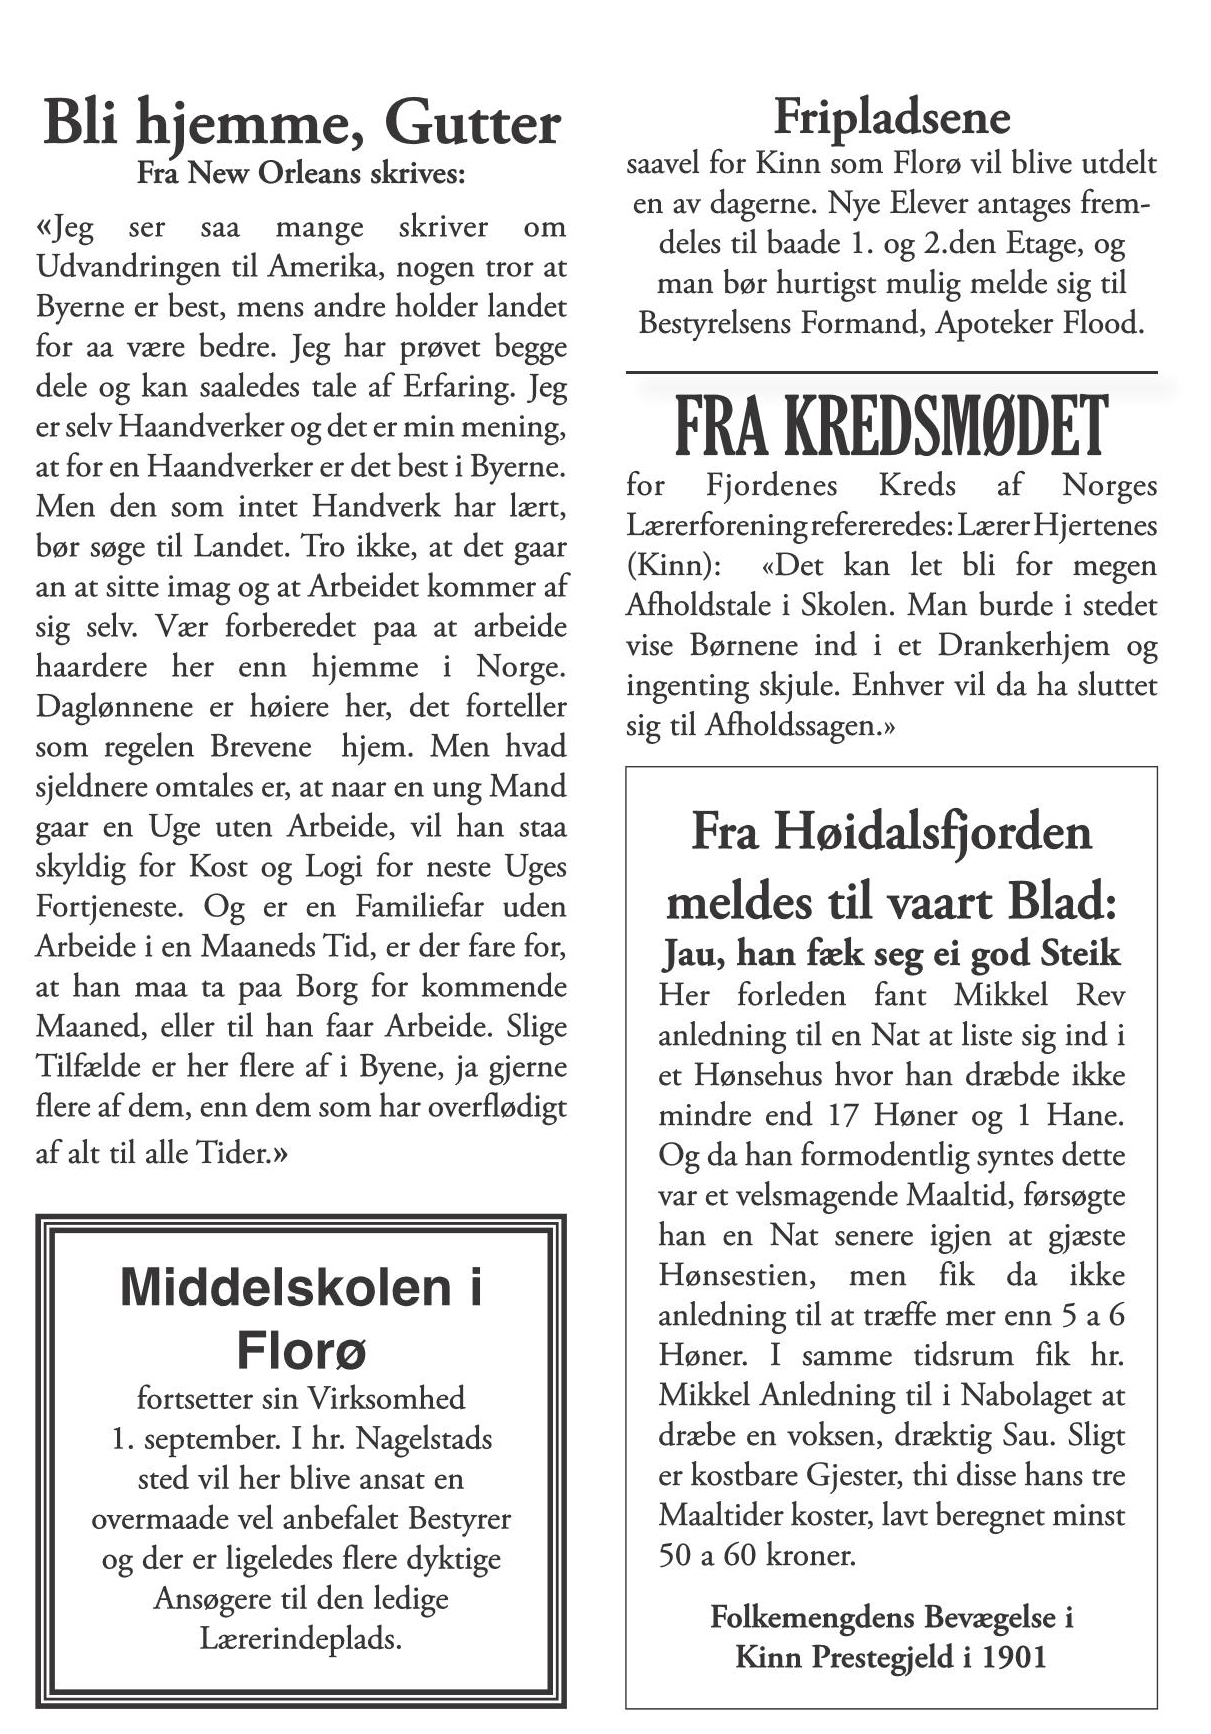 Floraminne 2007 Page 64